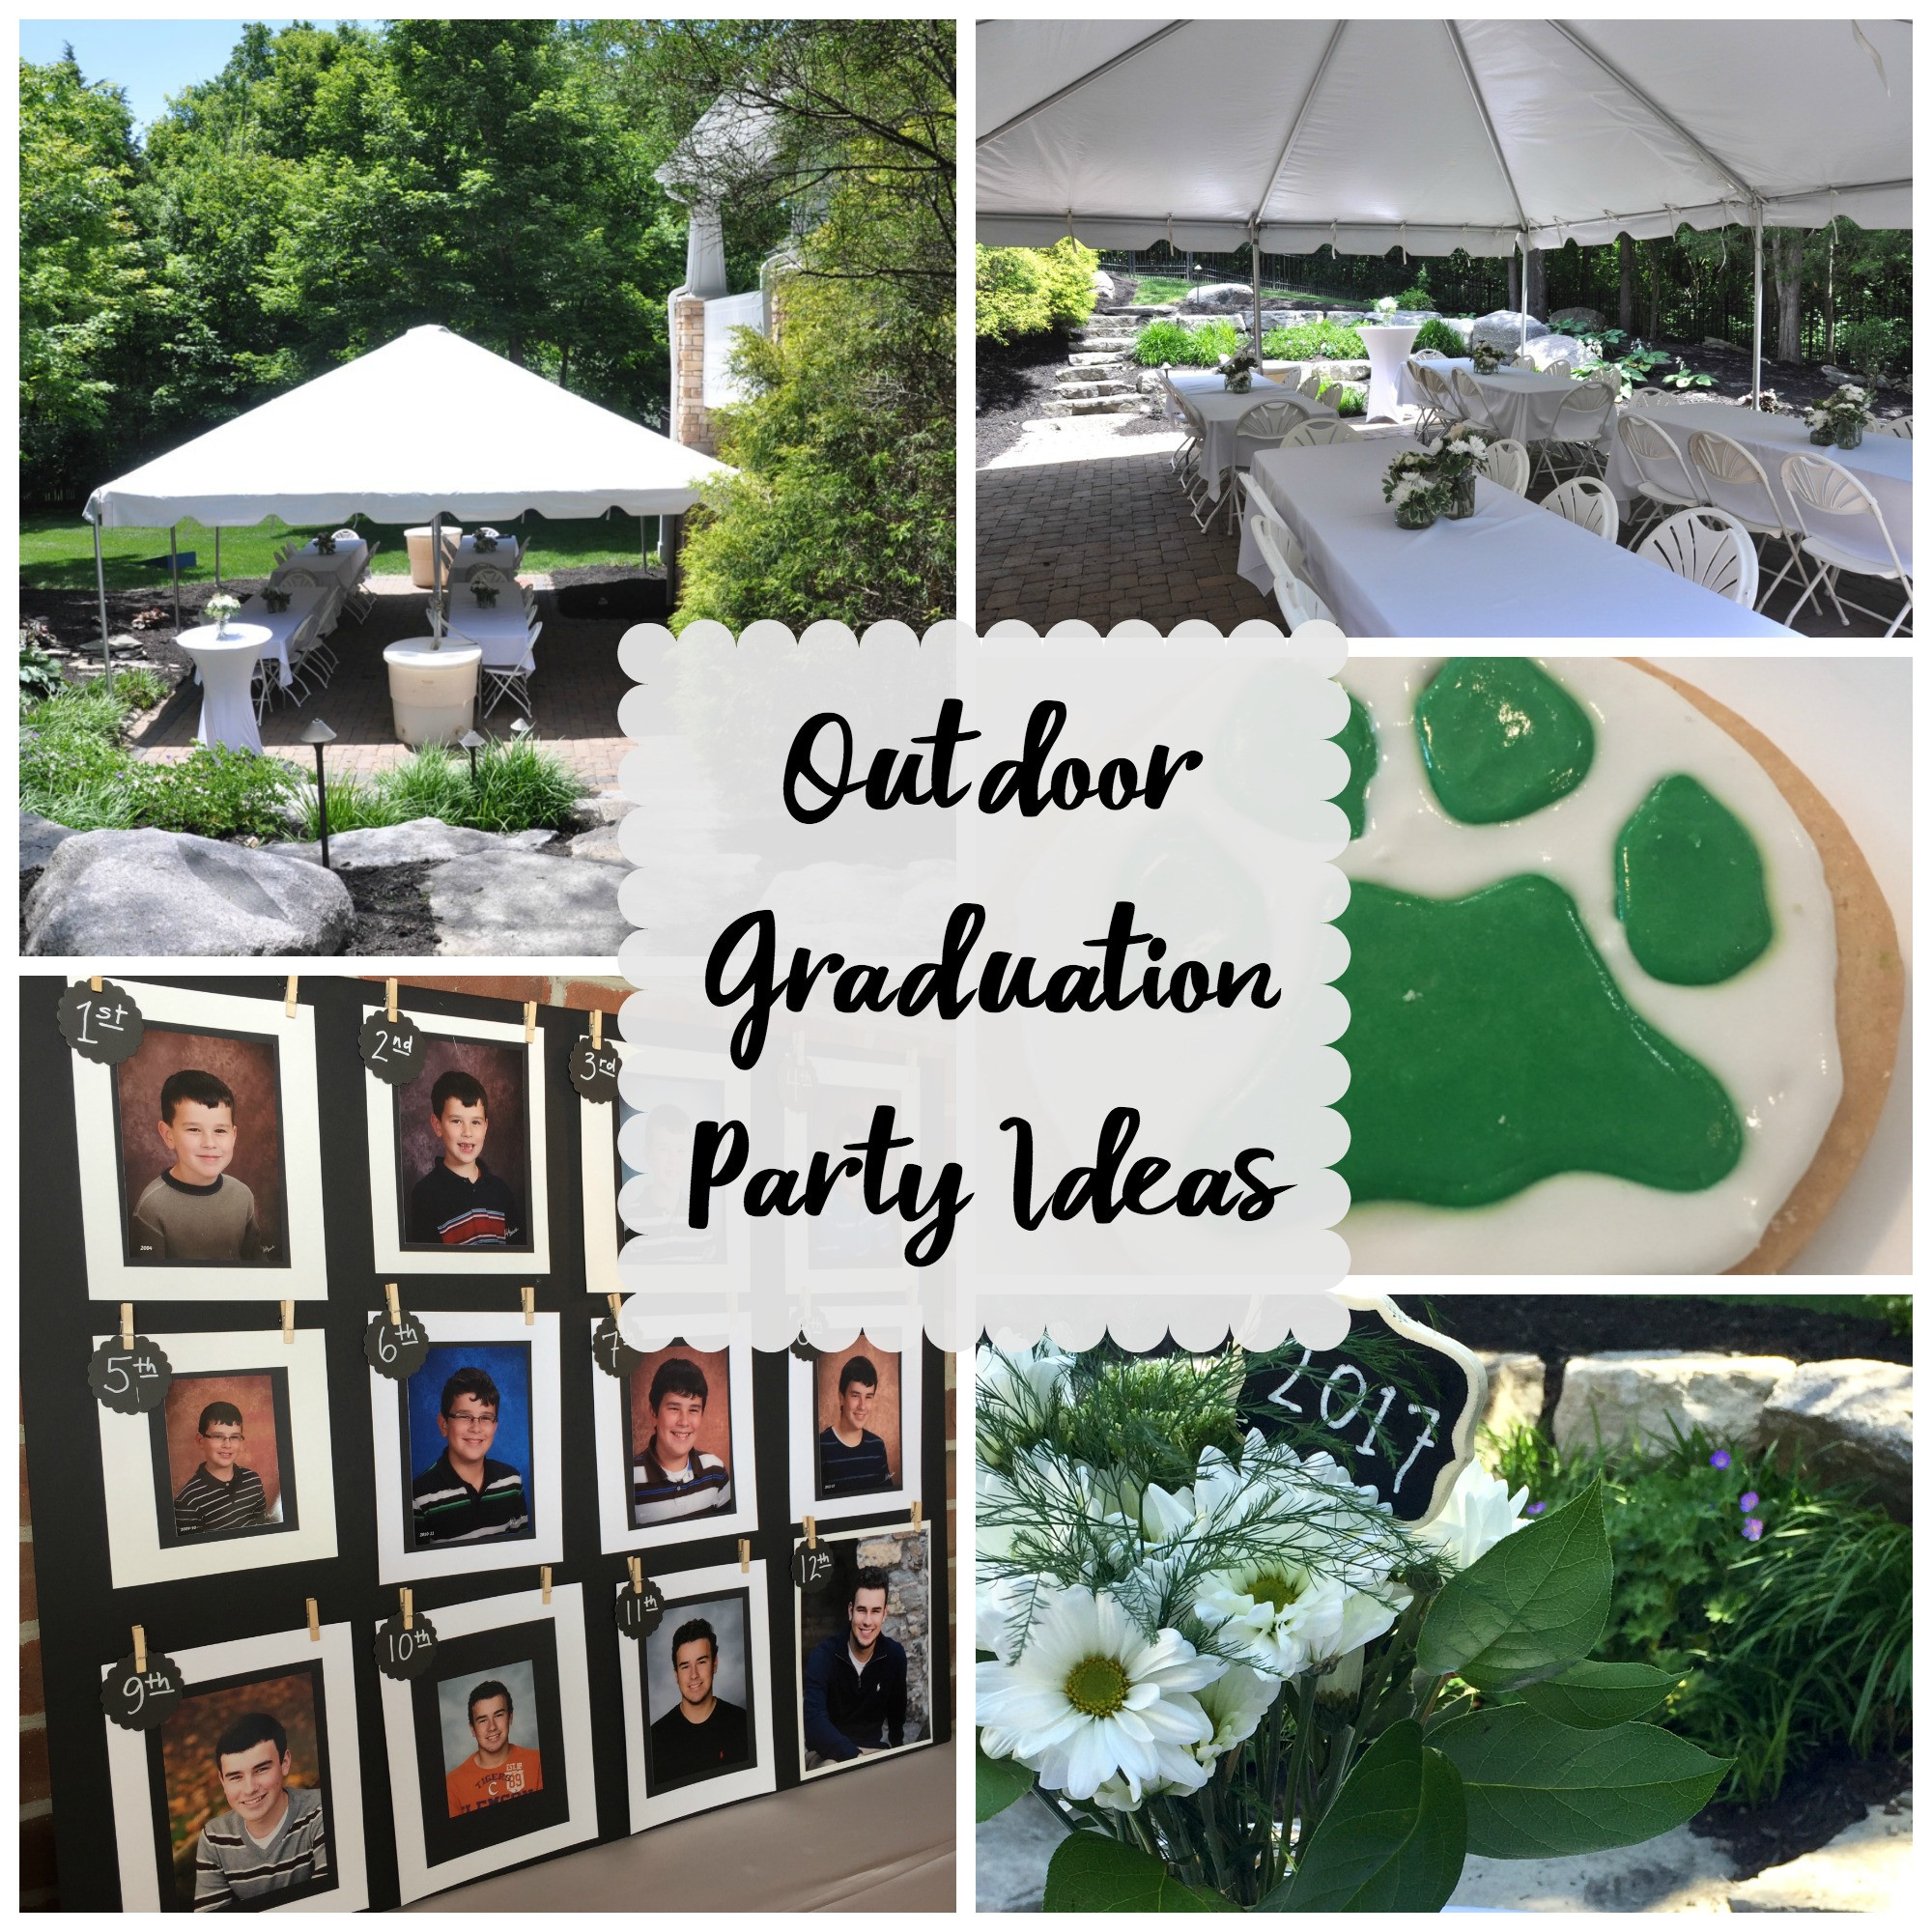 Senior Party Ideas Graduation
 Outdoor Graduation Party Evolution of Style